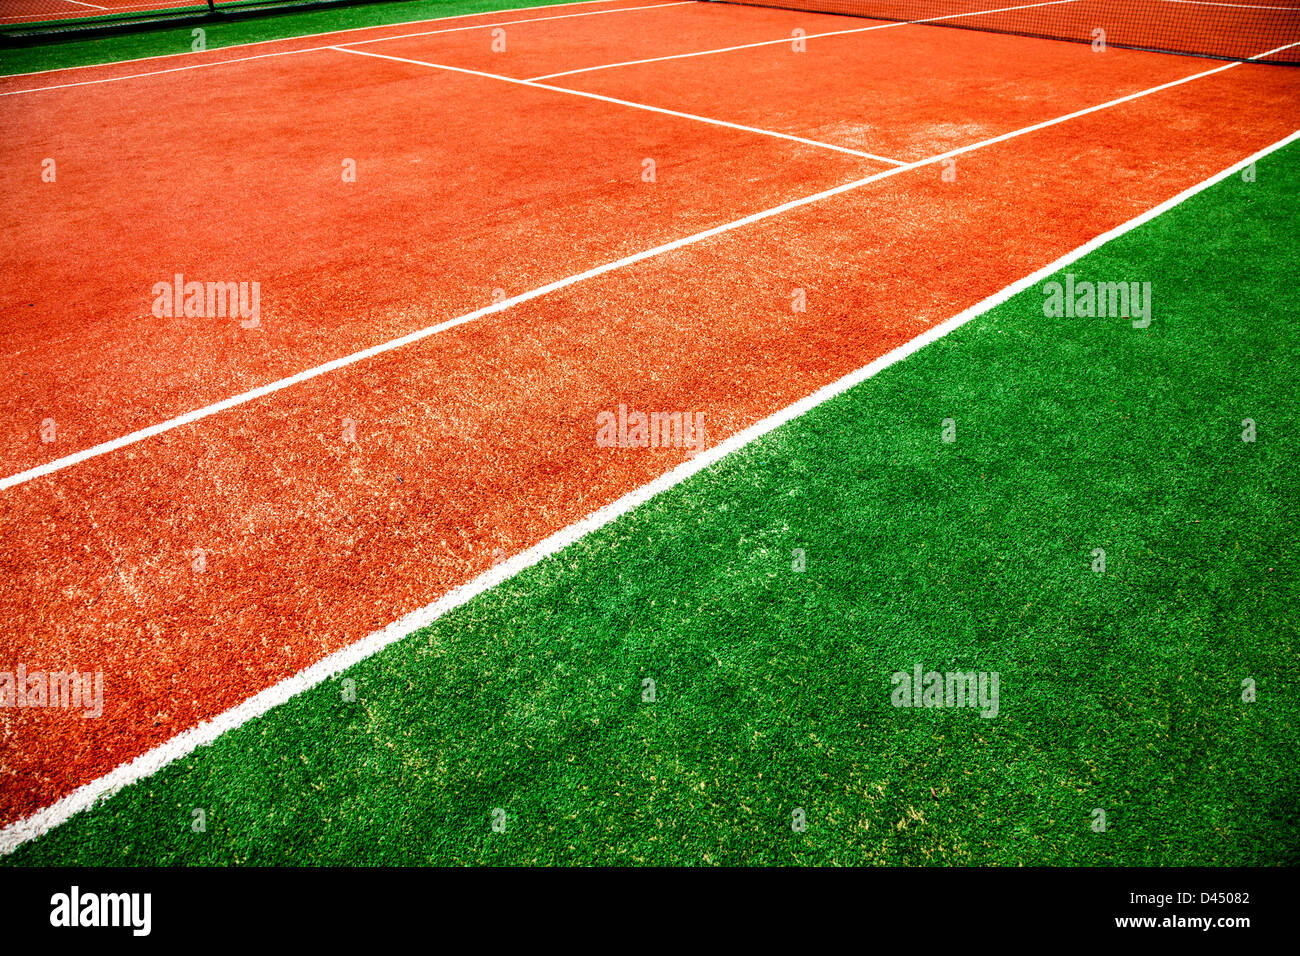 Pista de tenis cercanos antecedentes Foto de stock